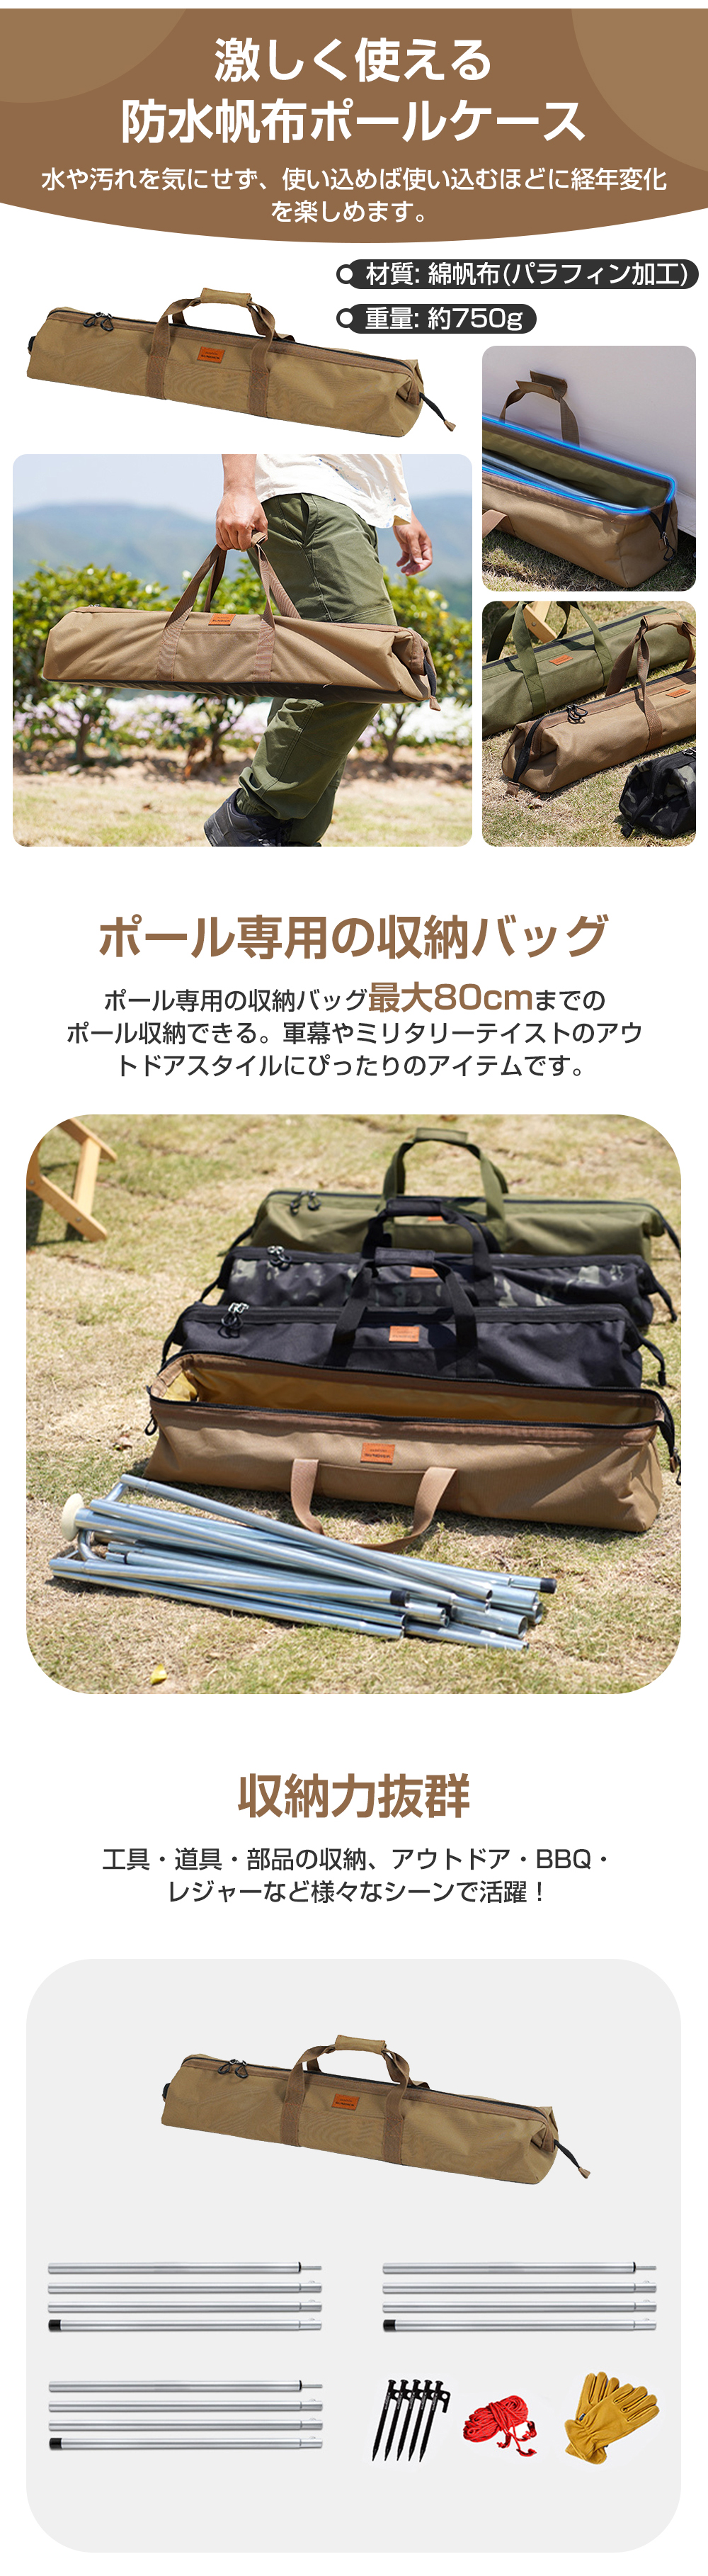 https://www.rakuten.ne.jp/gold/cole/productspage/outdoor-bag01/item_05.jpg